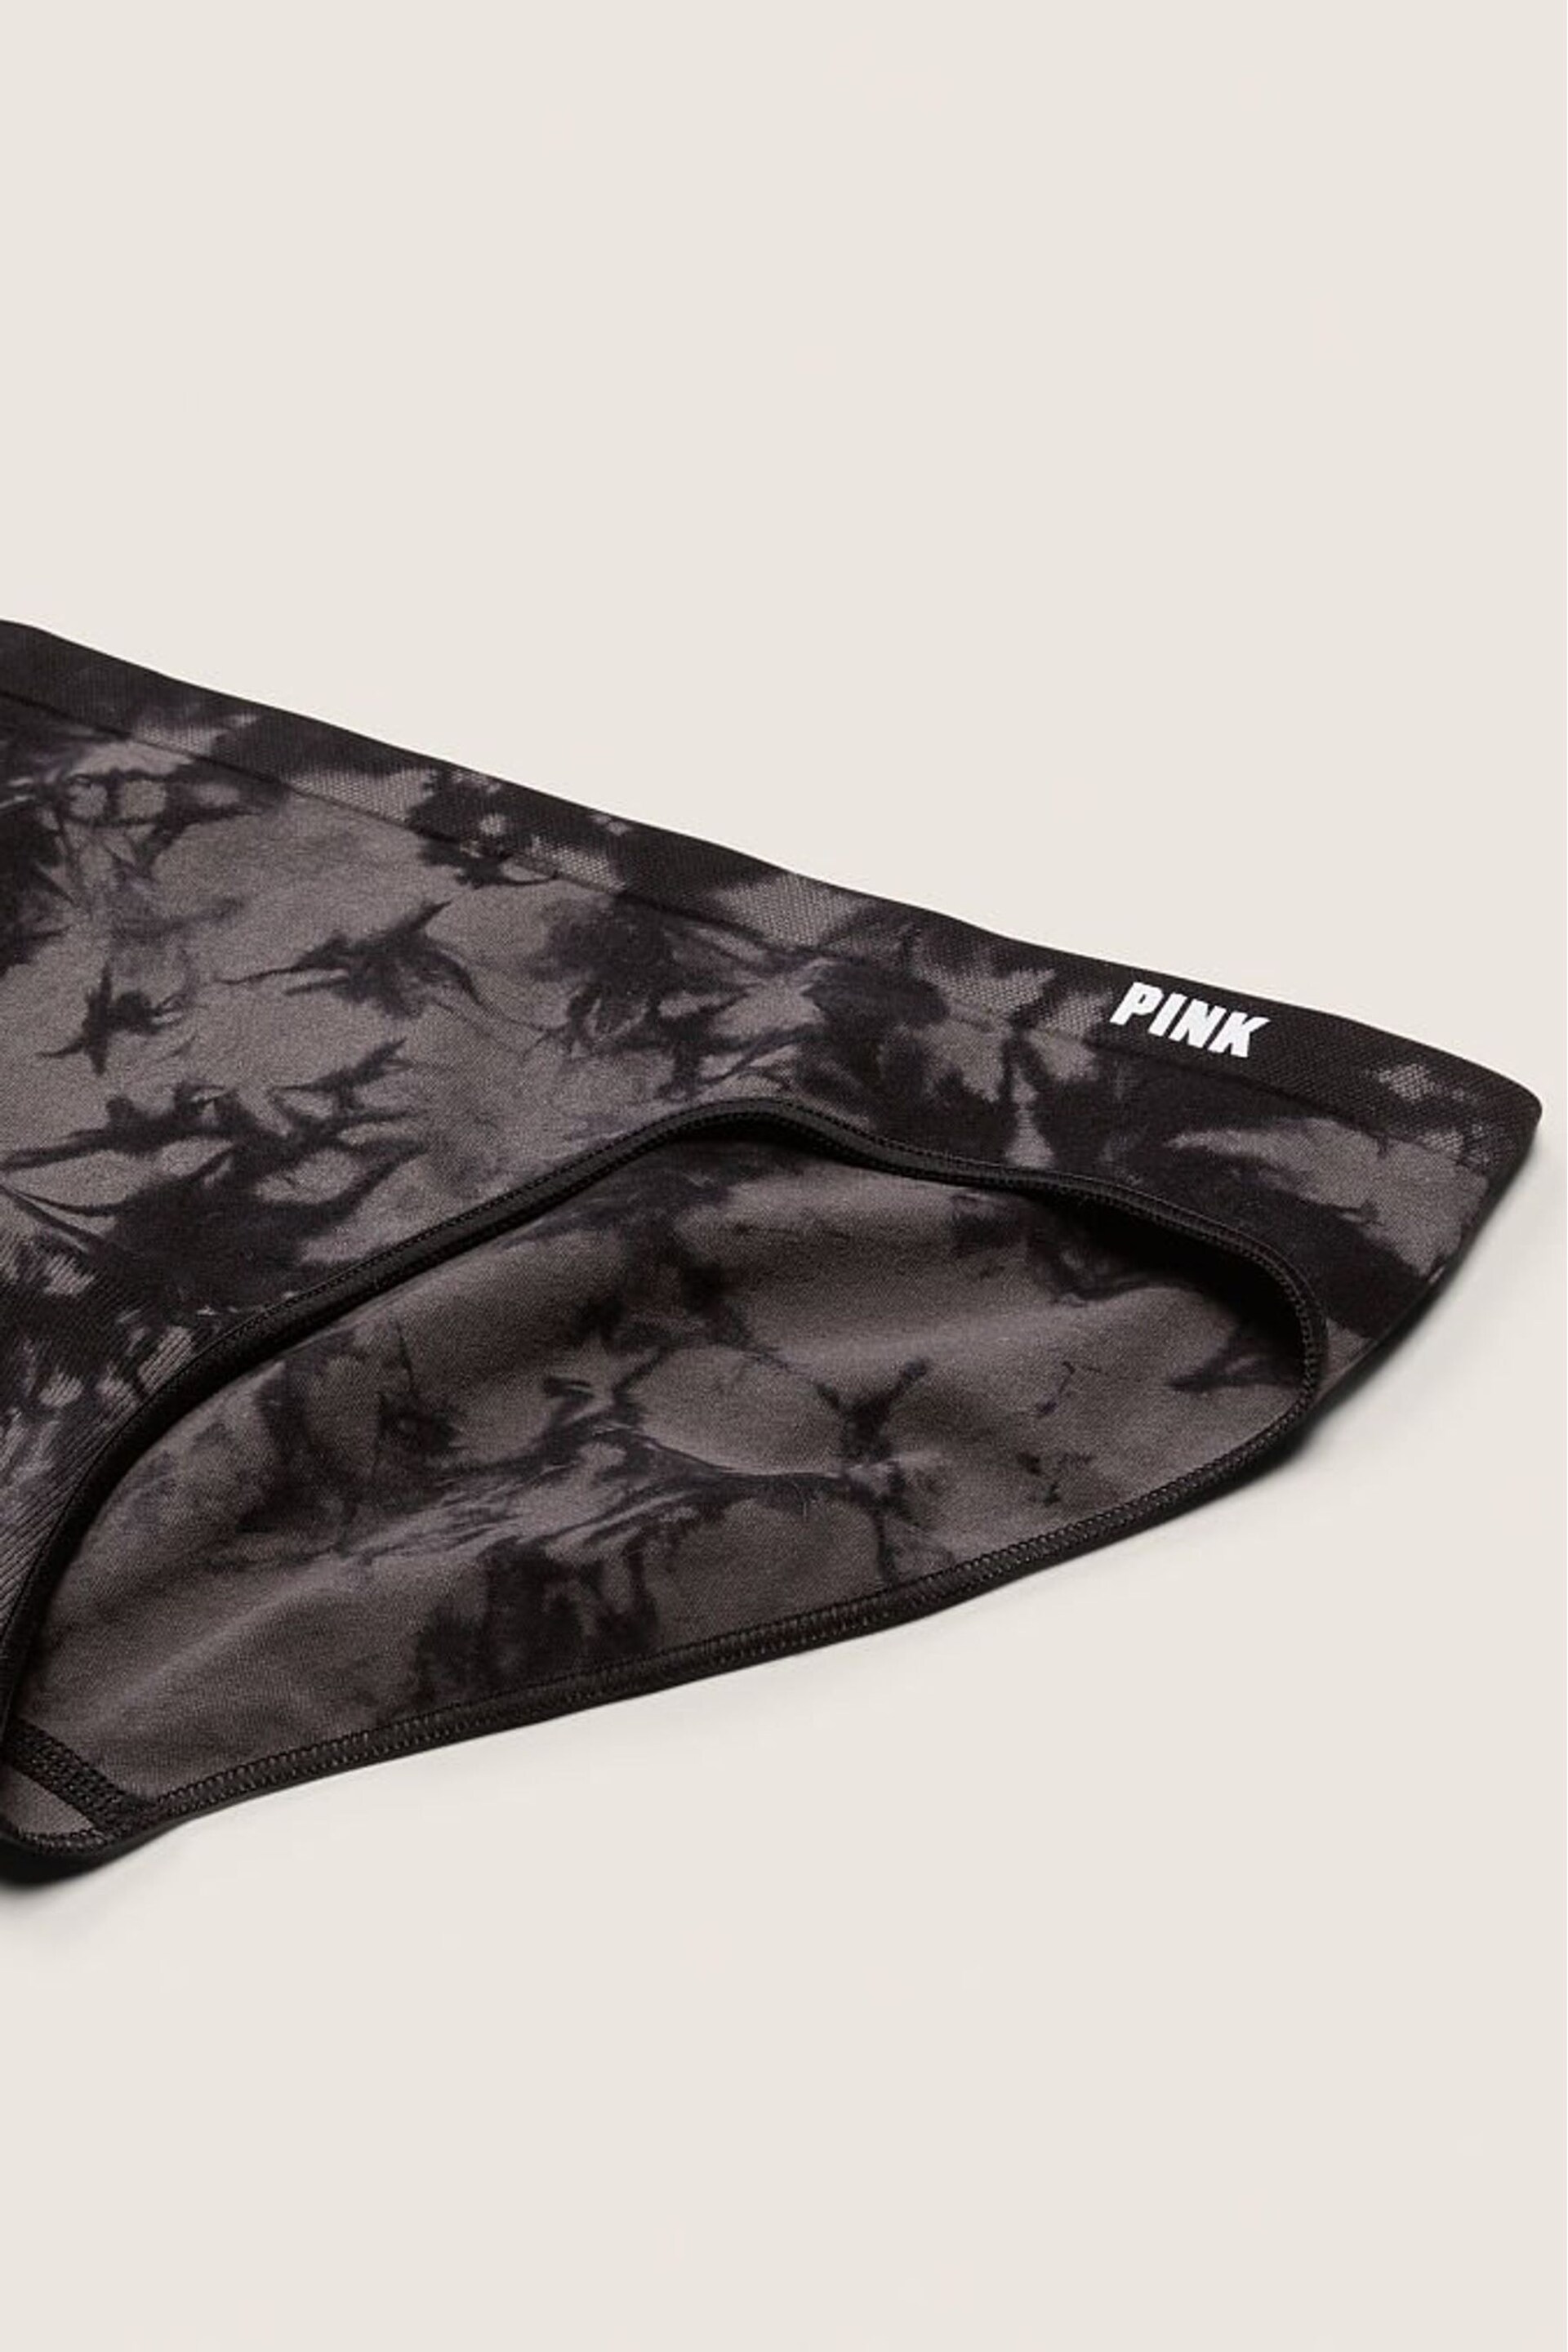 Victoria's Secret PINK Dark Charcoal Tie Dye Grey Bikini Seamless Knickers - Image 4 of 4